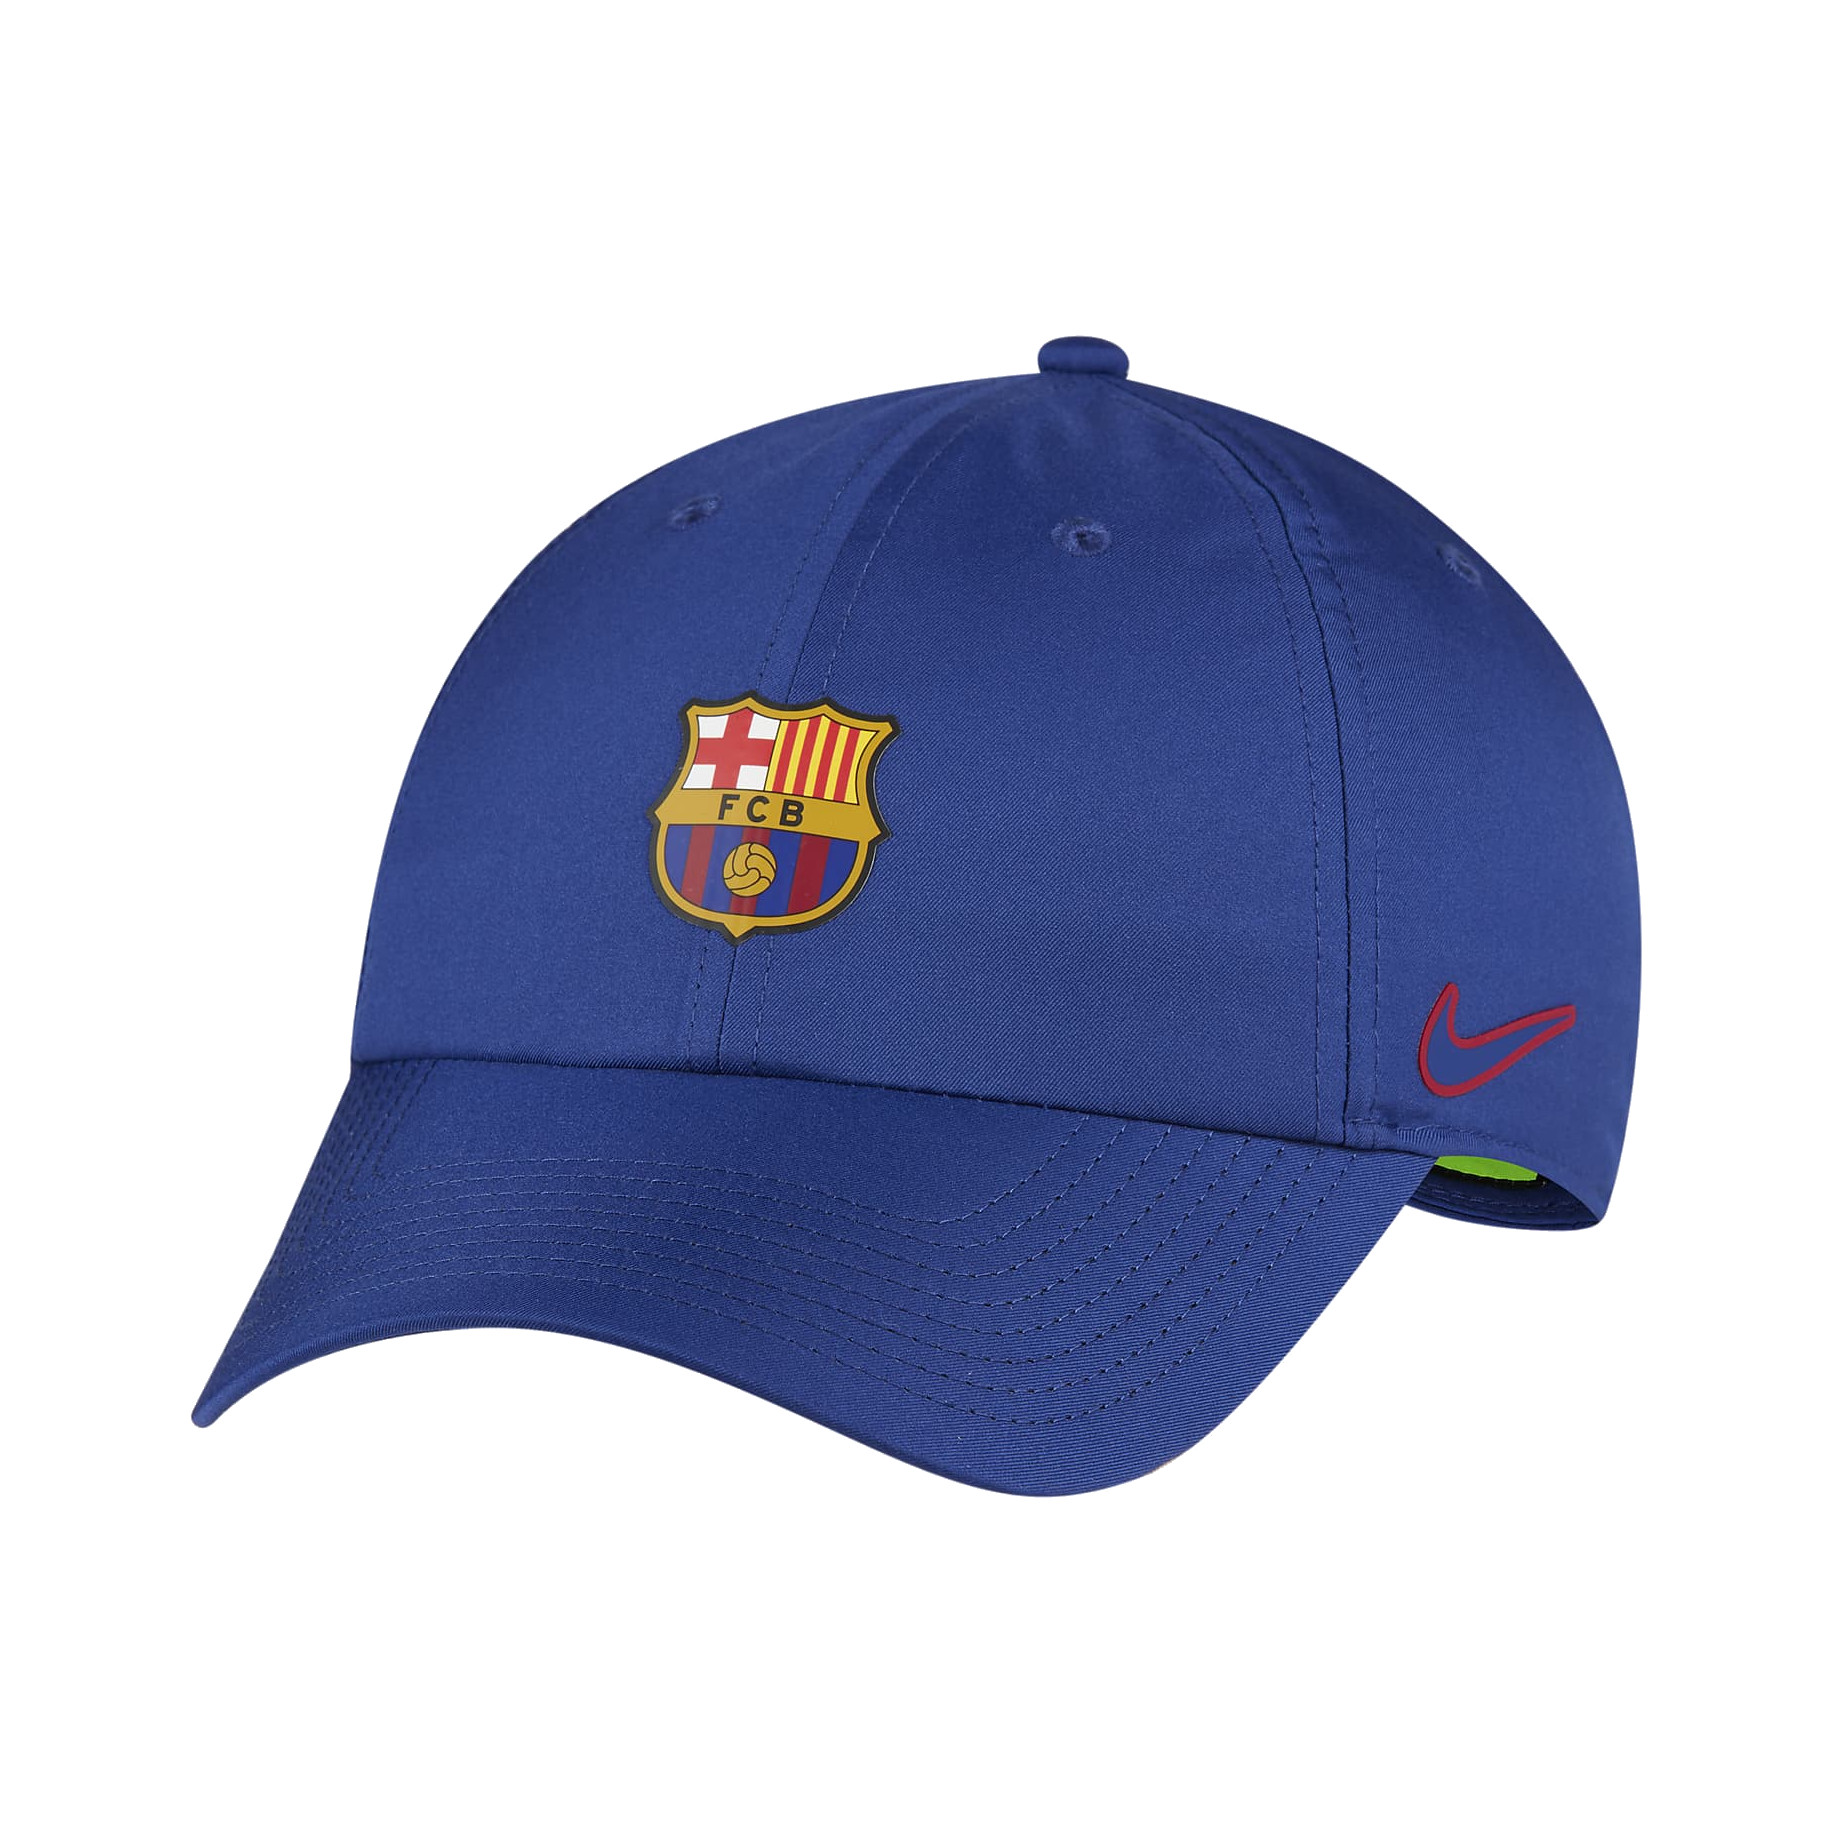 FC Barcelona cap Voetbalshirts.com